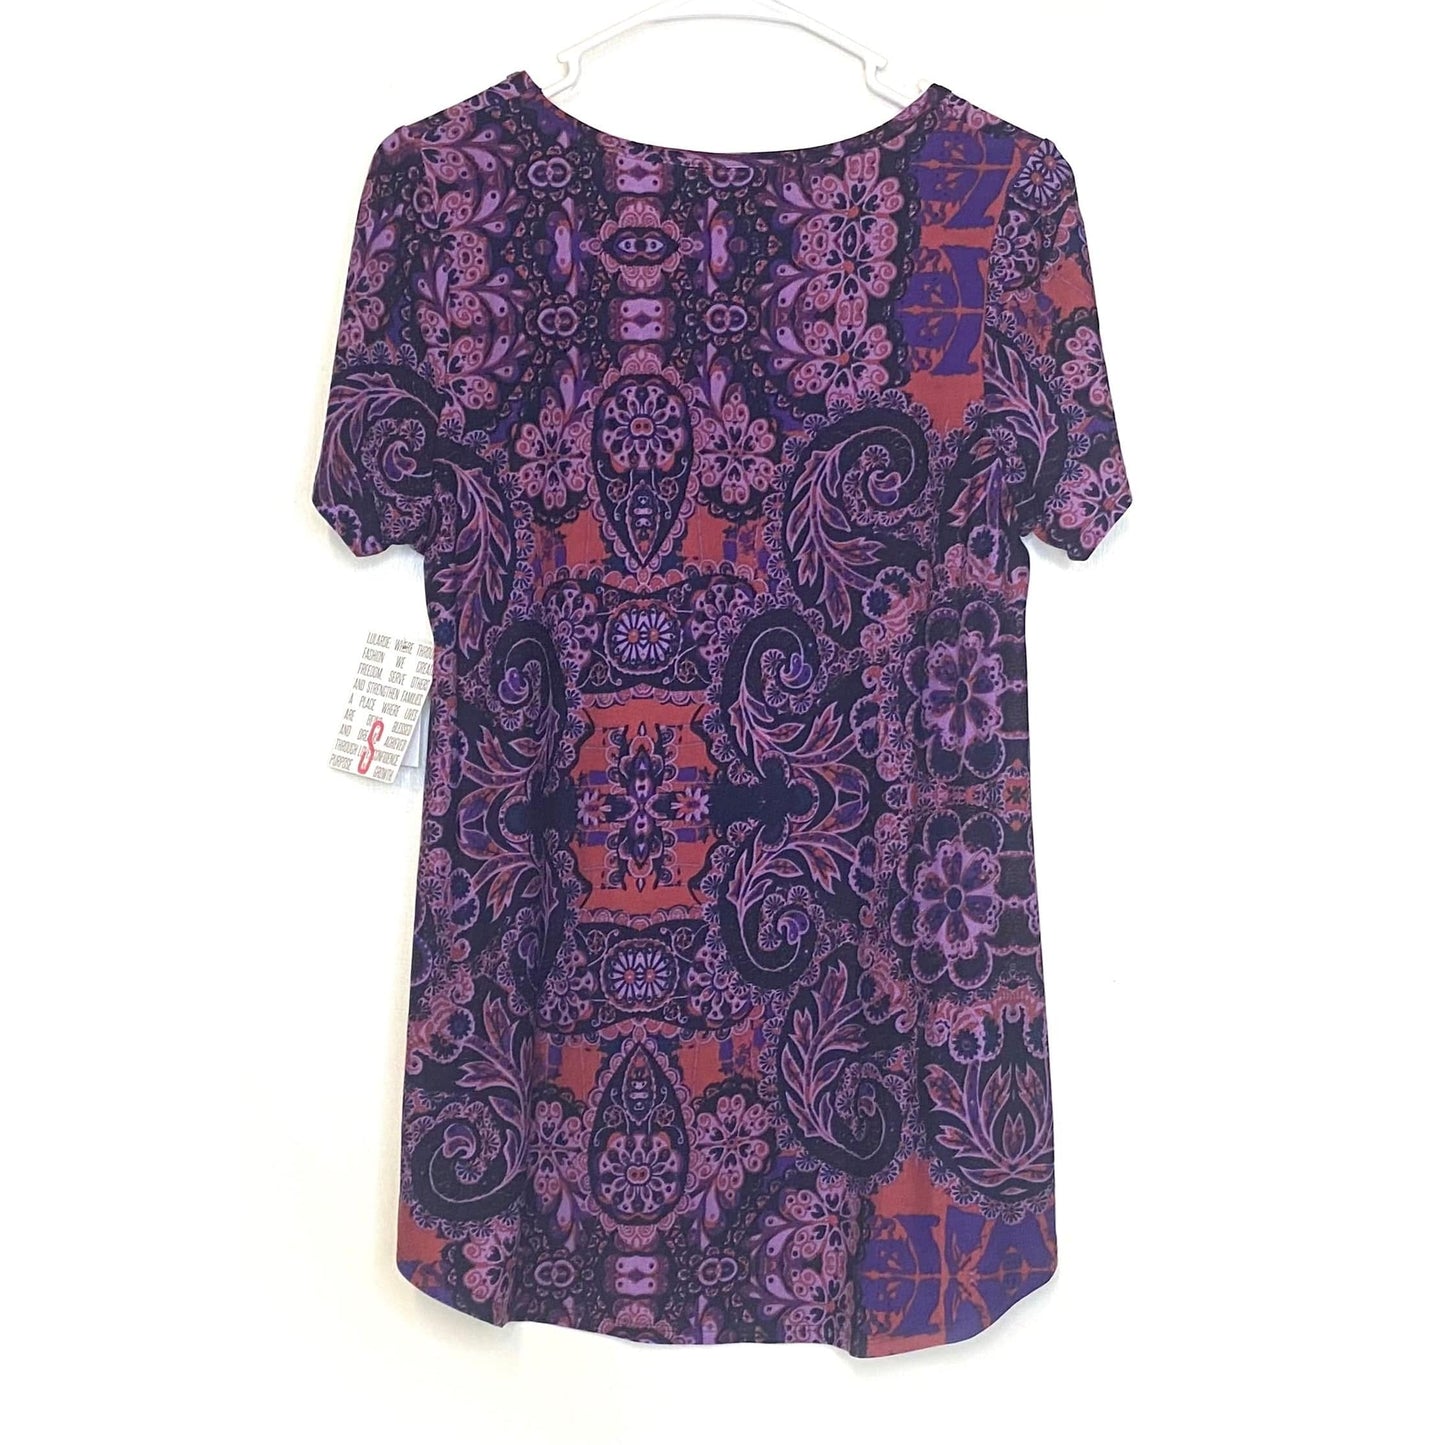 LuLaRoe Womens S Black/Purple Classic T Floral T-Shirt S/s NWT